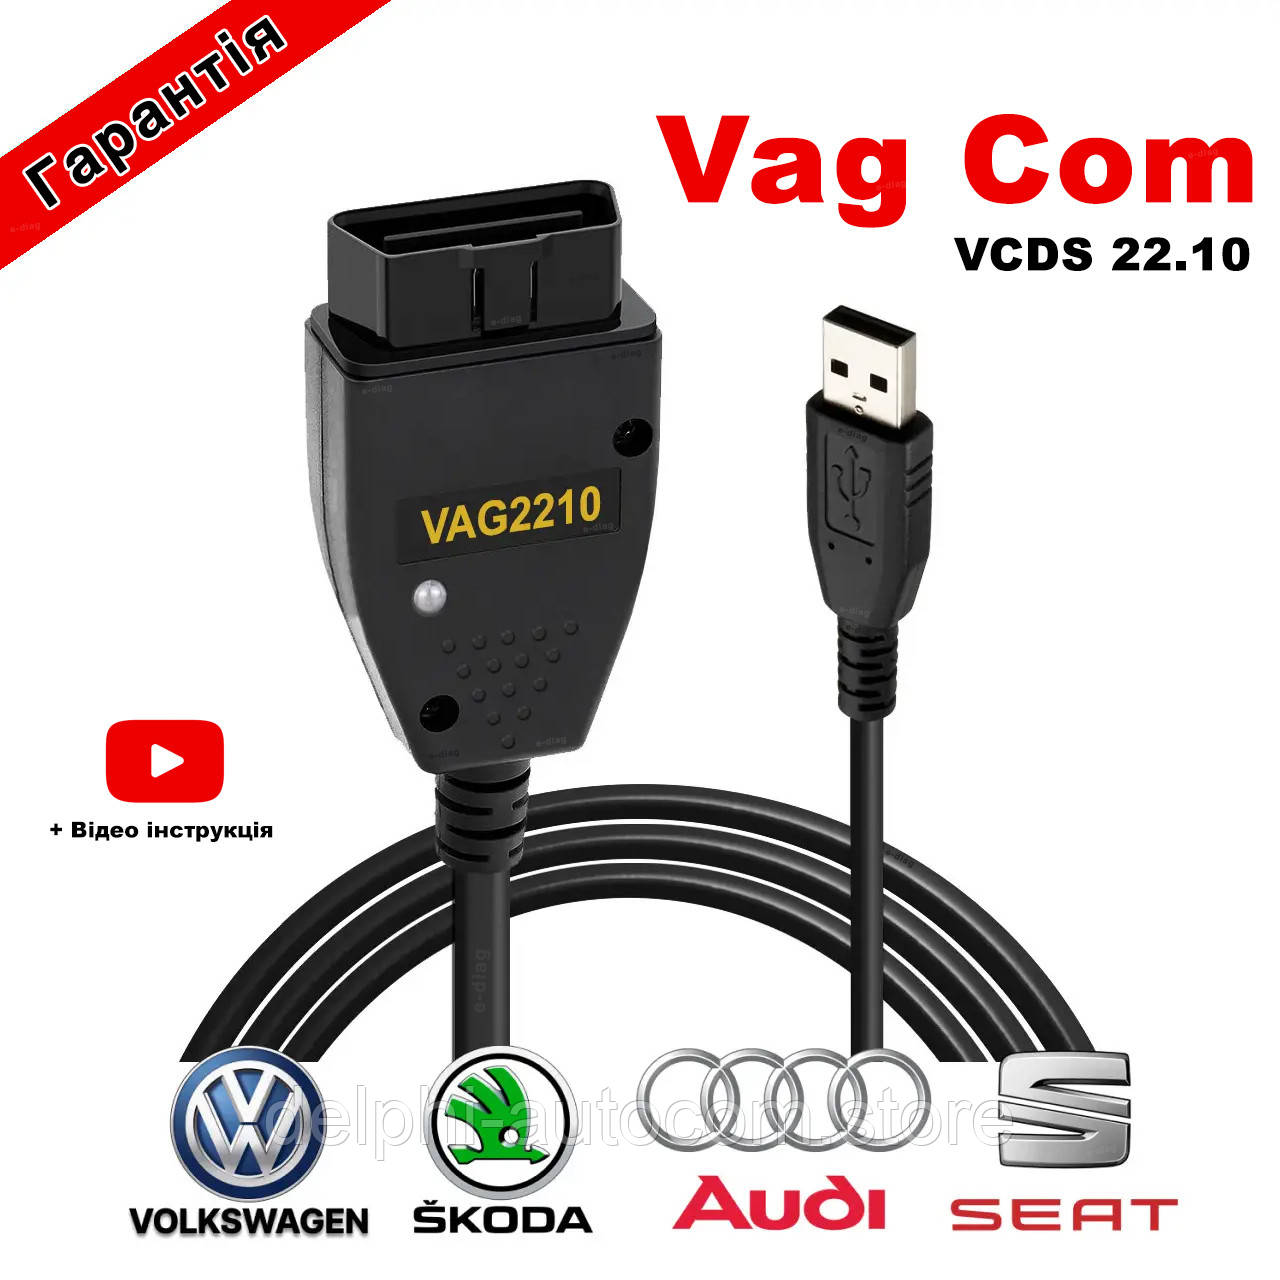 Автосканер Вася Діагност Vag com 22.10 російська версія vcds hex can obd2 + відео інструкція